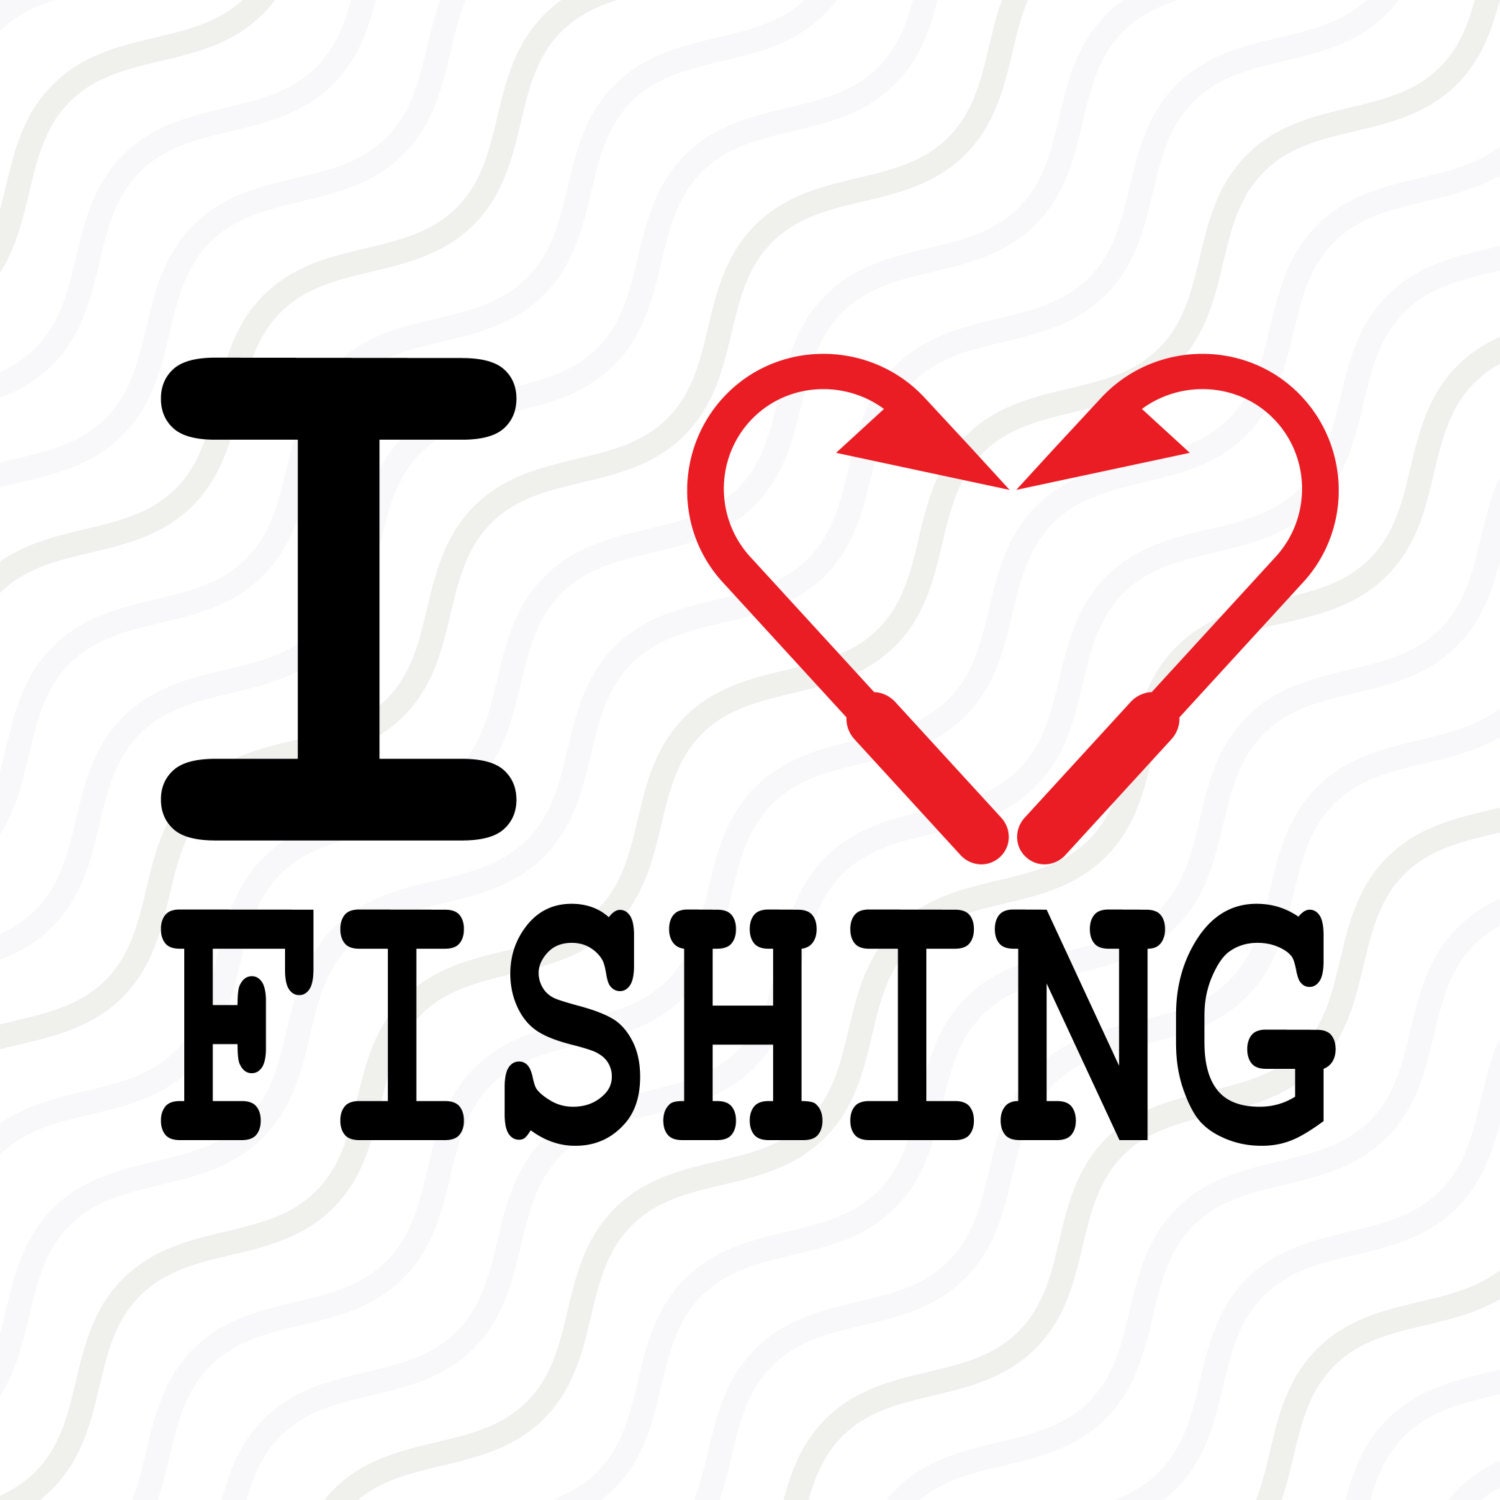 Download I Love Fishing SVG Fish Hook SVG Fishing SVG Cut table